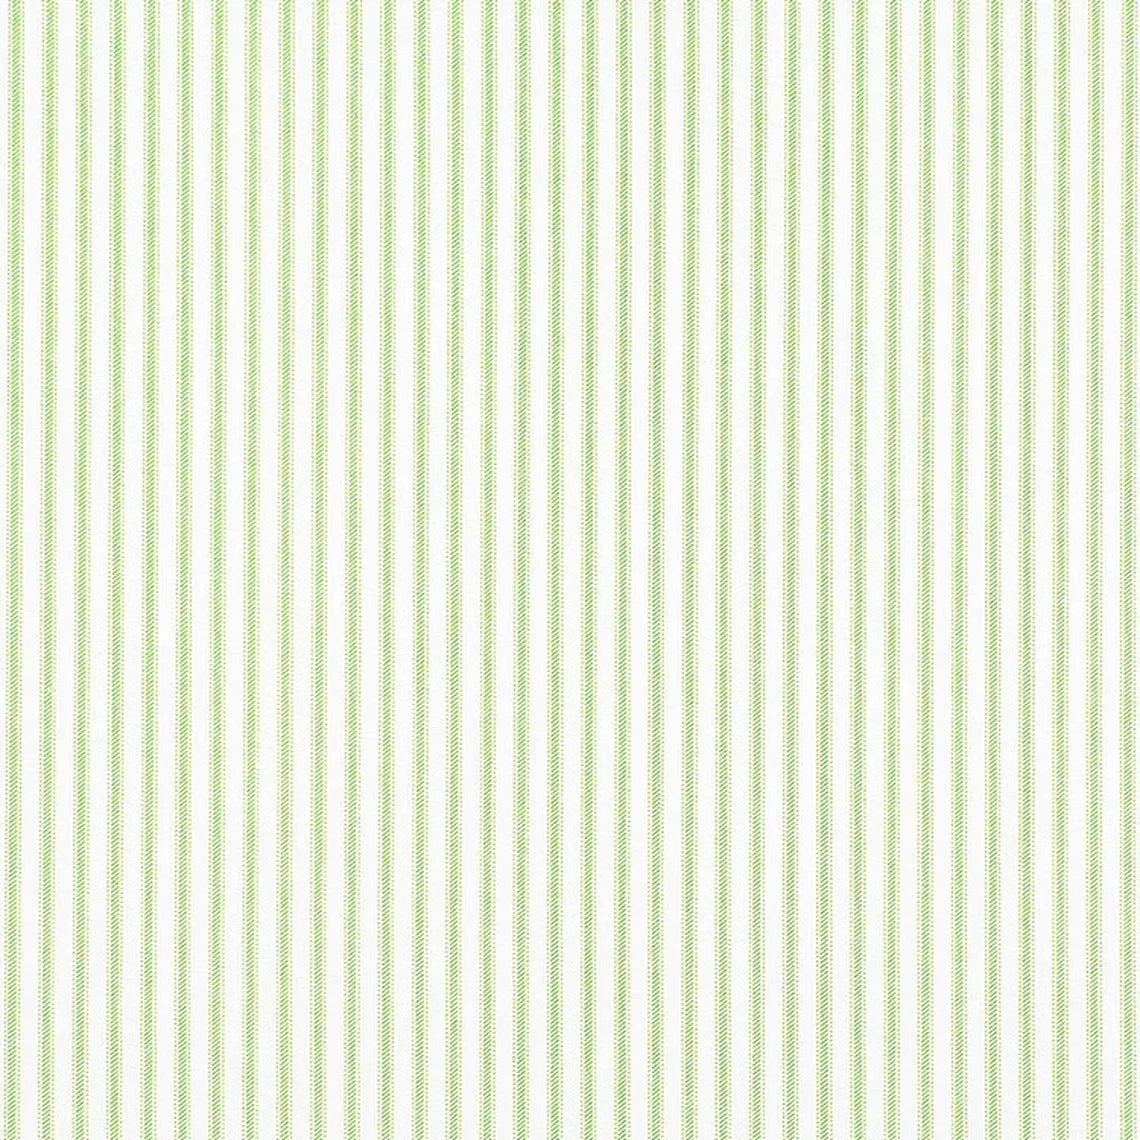 gathered bedskirt in classic kiwi green ticking stripe on white